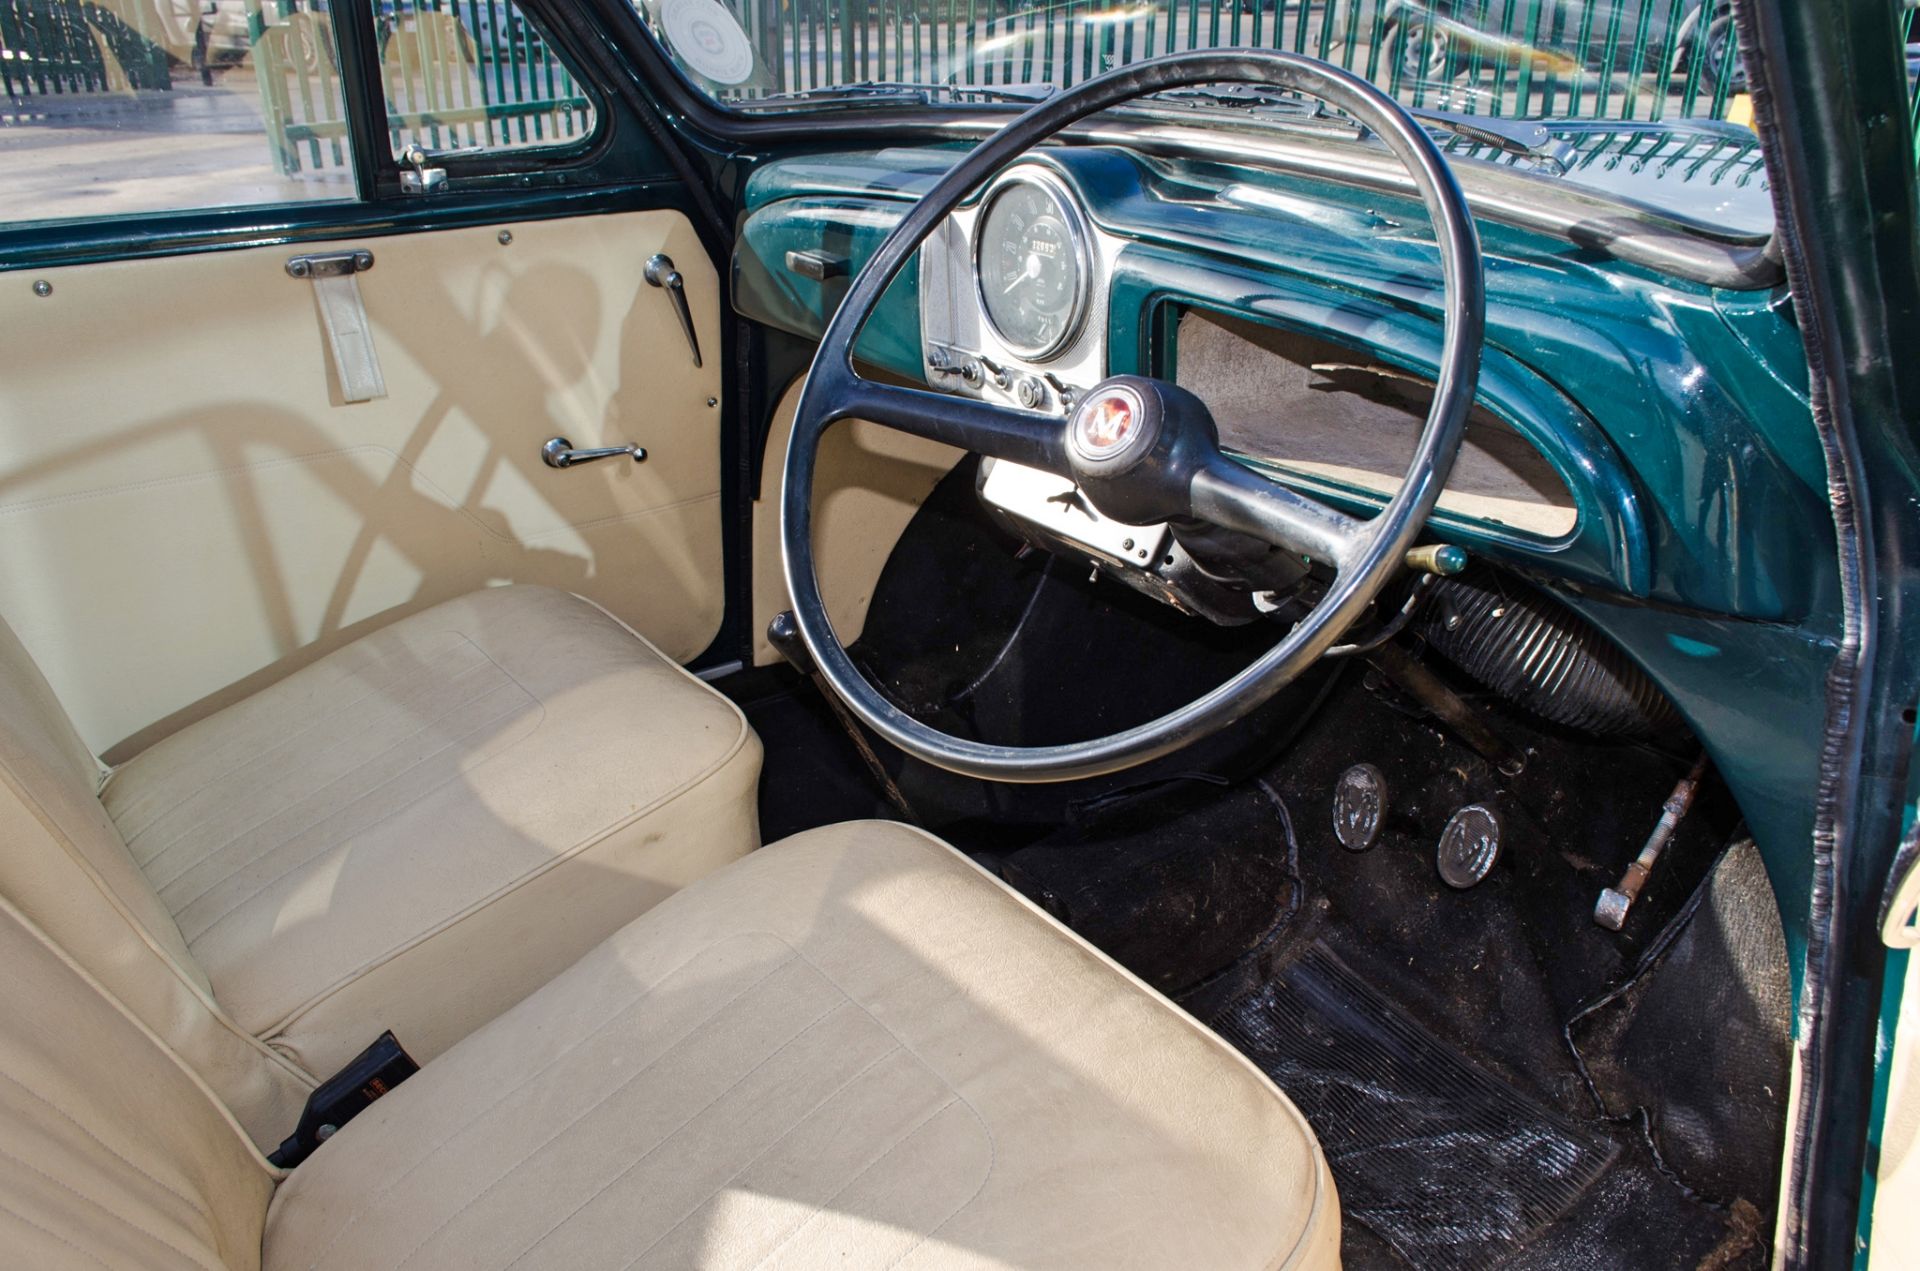 1968 Morris Minor 1000 1098cc series V 2 door convertible - Image 33 of 58